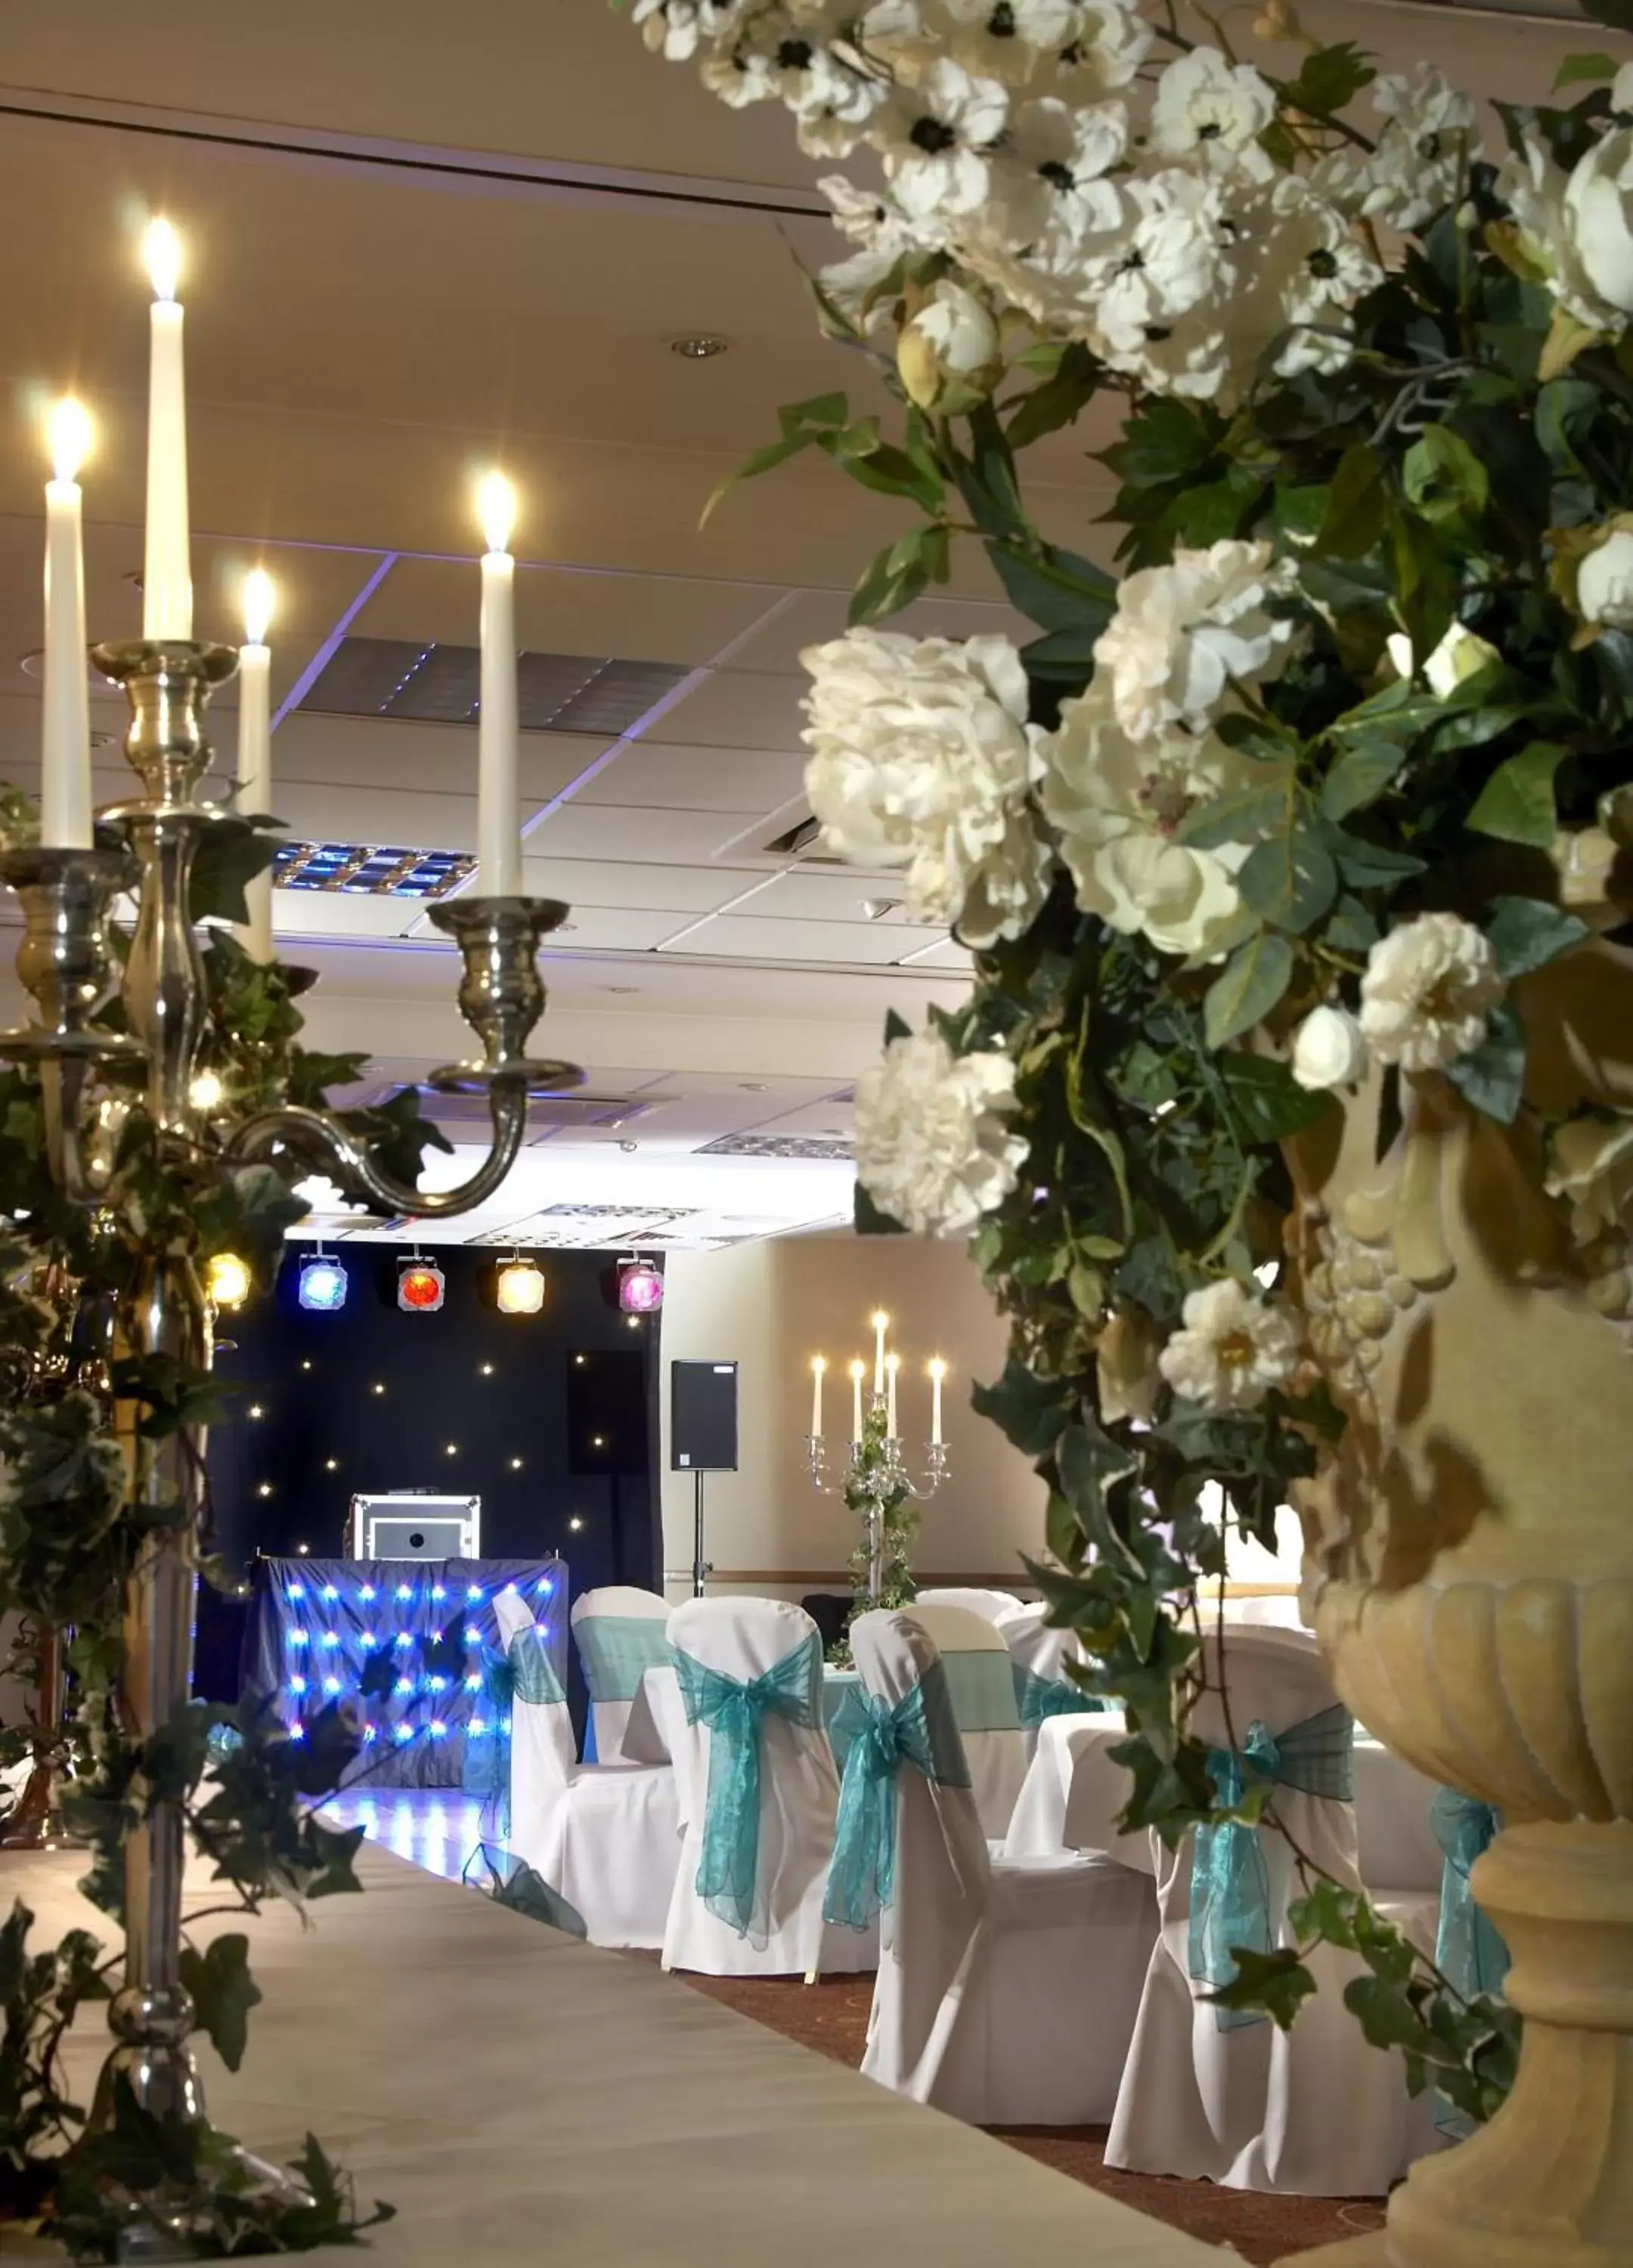 Banquet/Function facilities, Banquet Facilities in Avisford Park Hotel